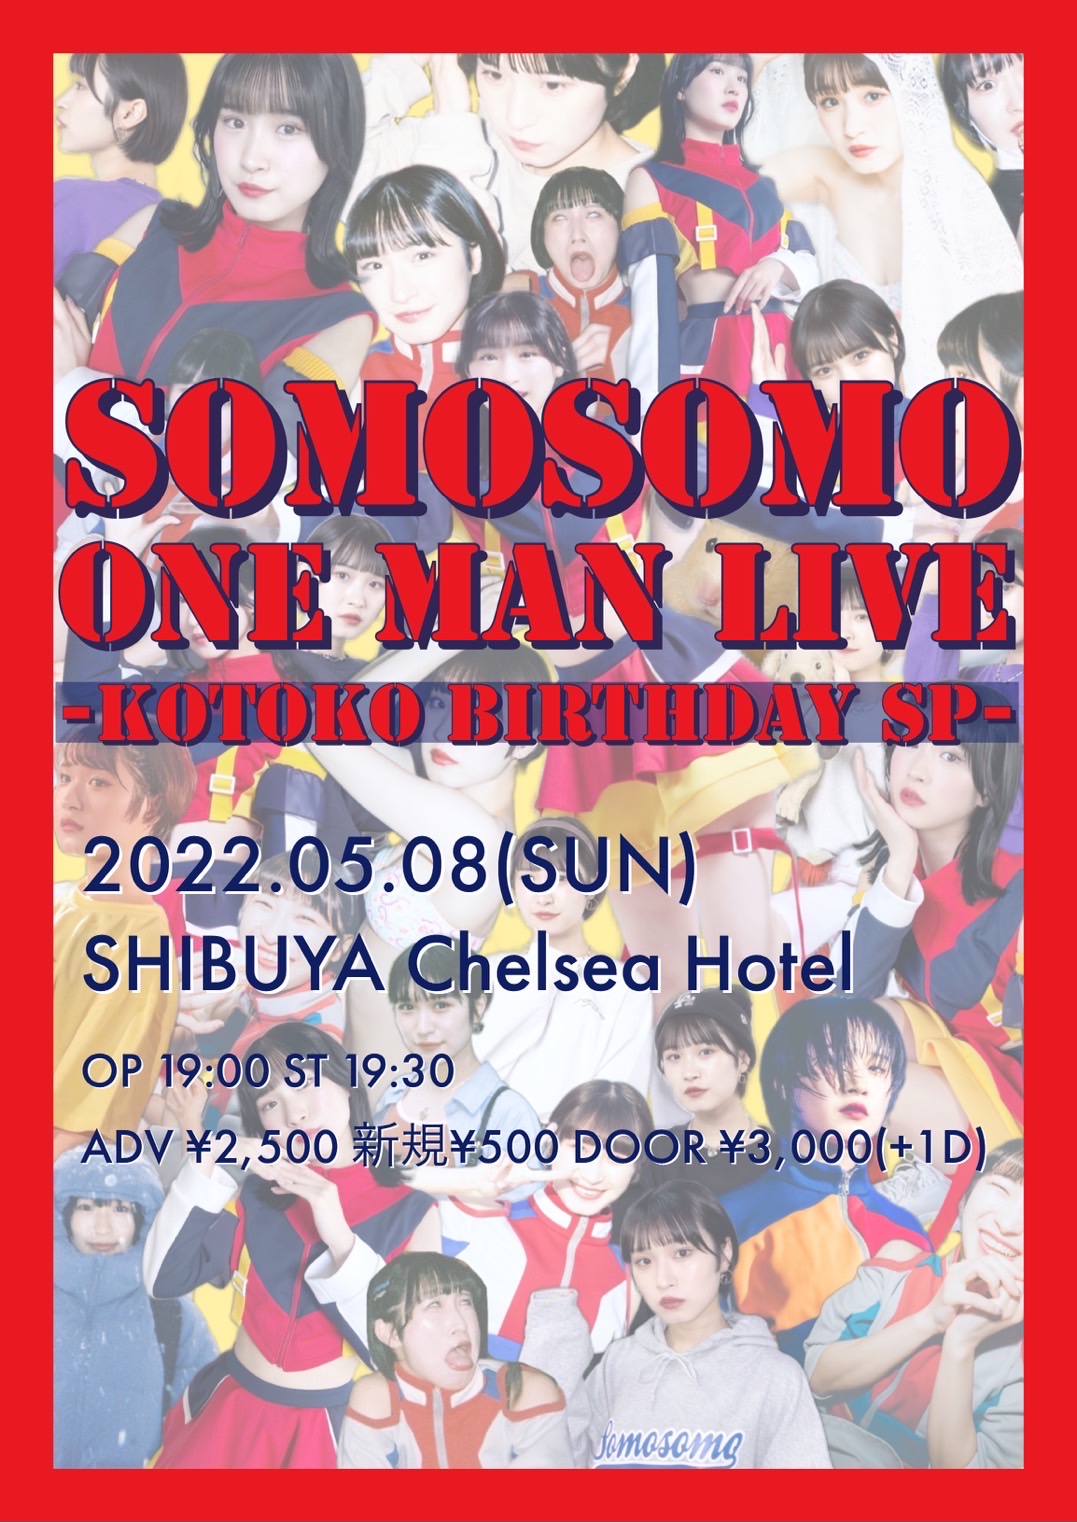 SOMOSOMO ONE MAN LIVE -KOTOKO BIRTHDAY SP-